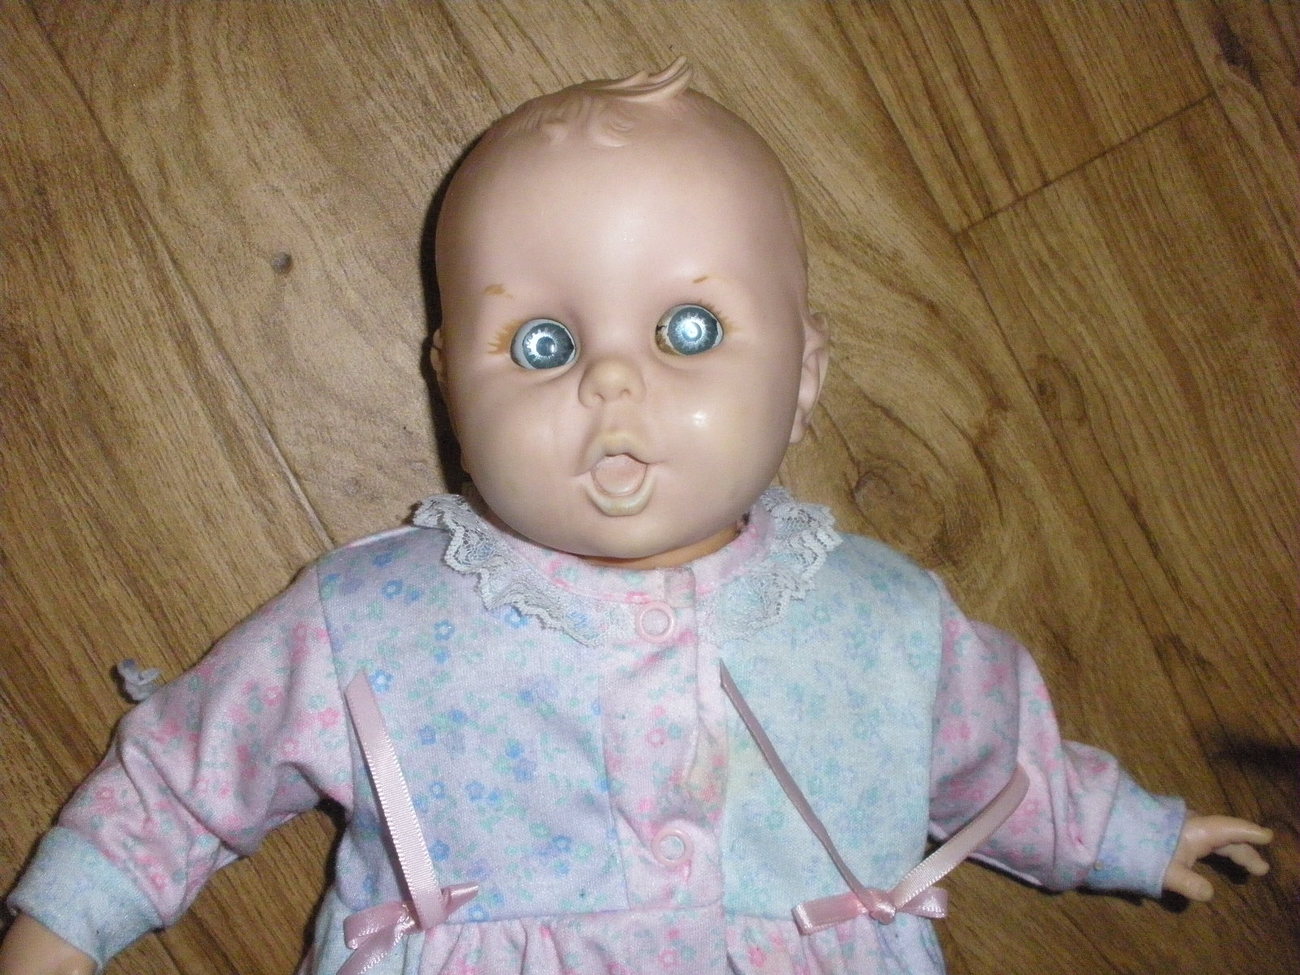 1994 gerber baby doll